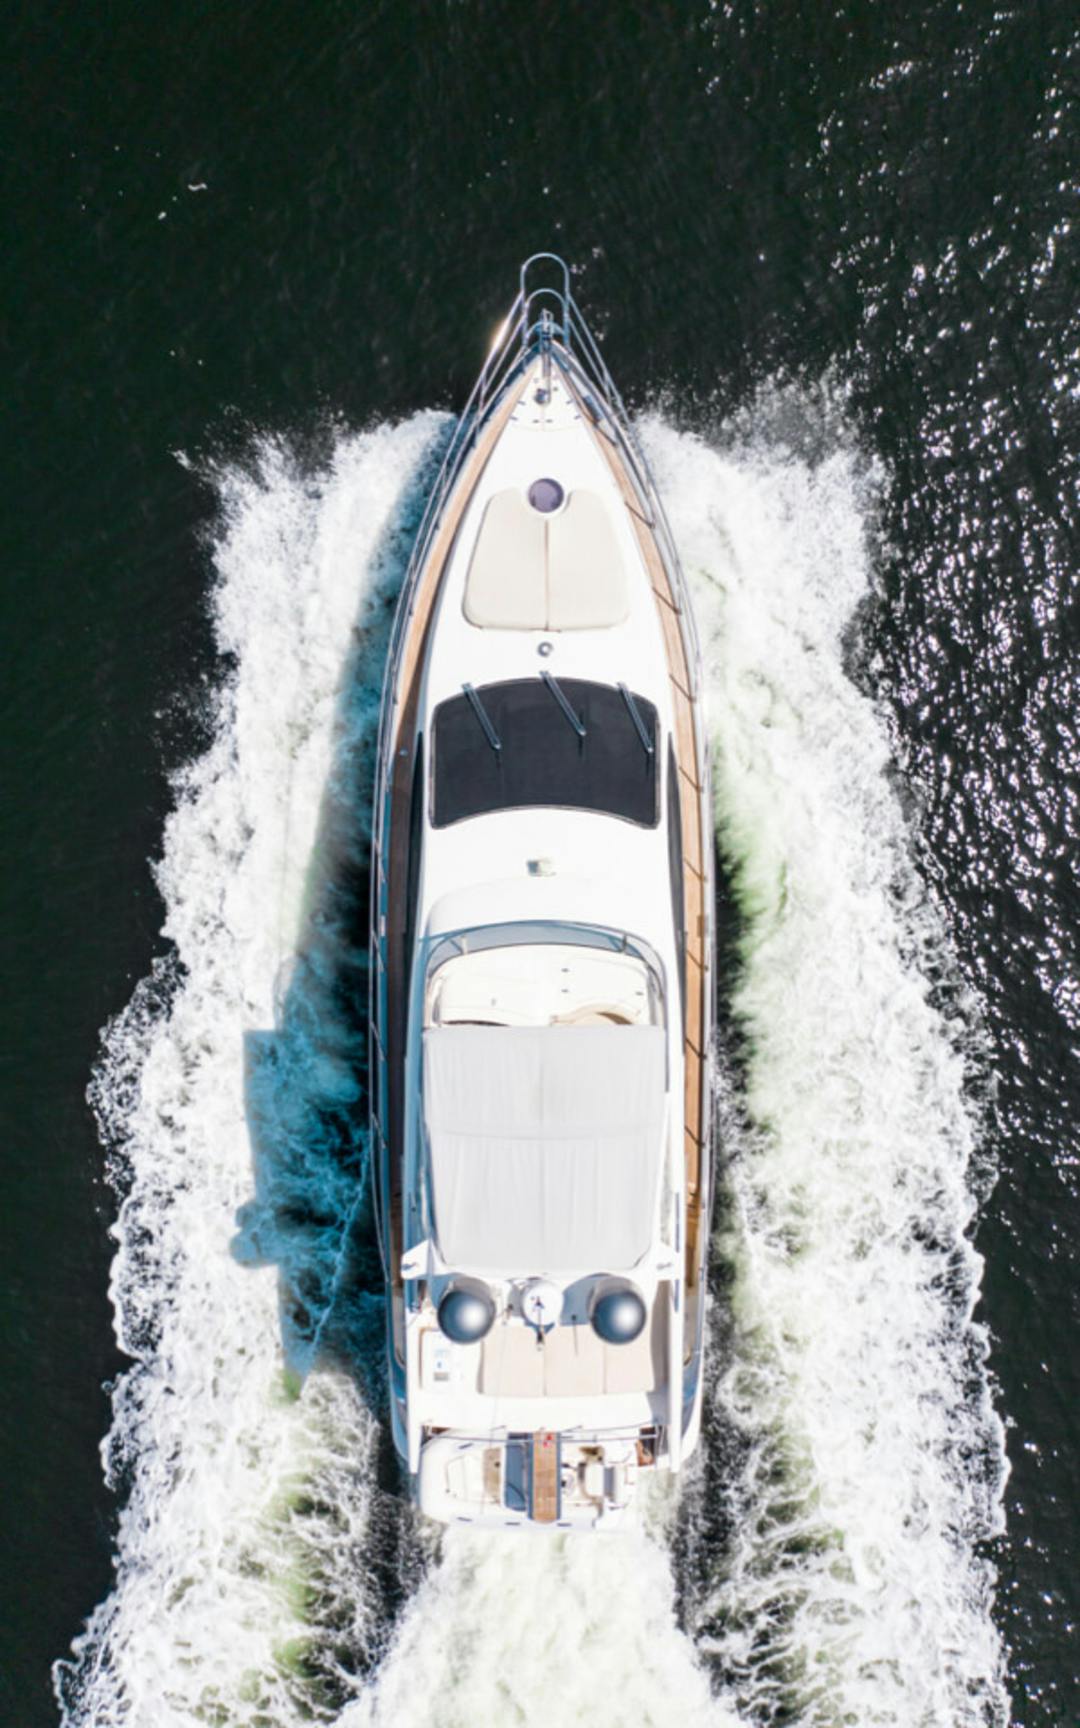 55 Azimut luxury charter yacht - Miami Beach Marina, Alton Road, Miami Beach, FL, USA